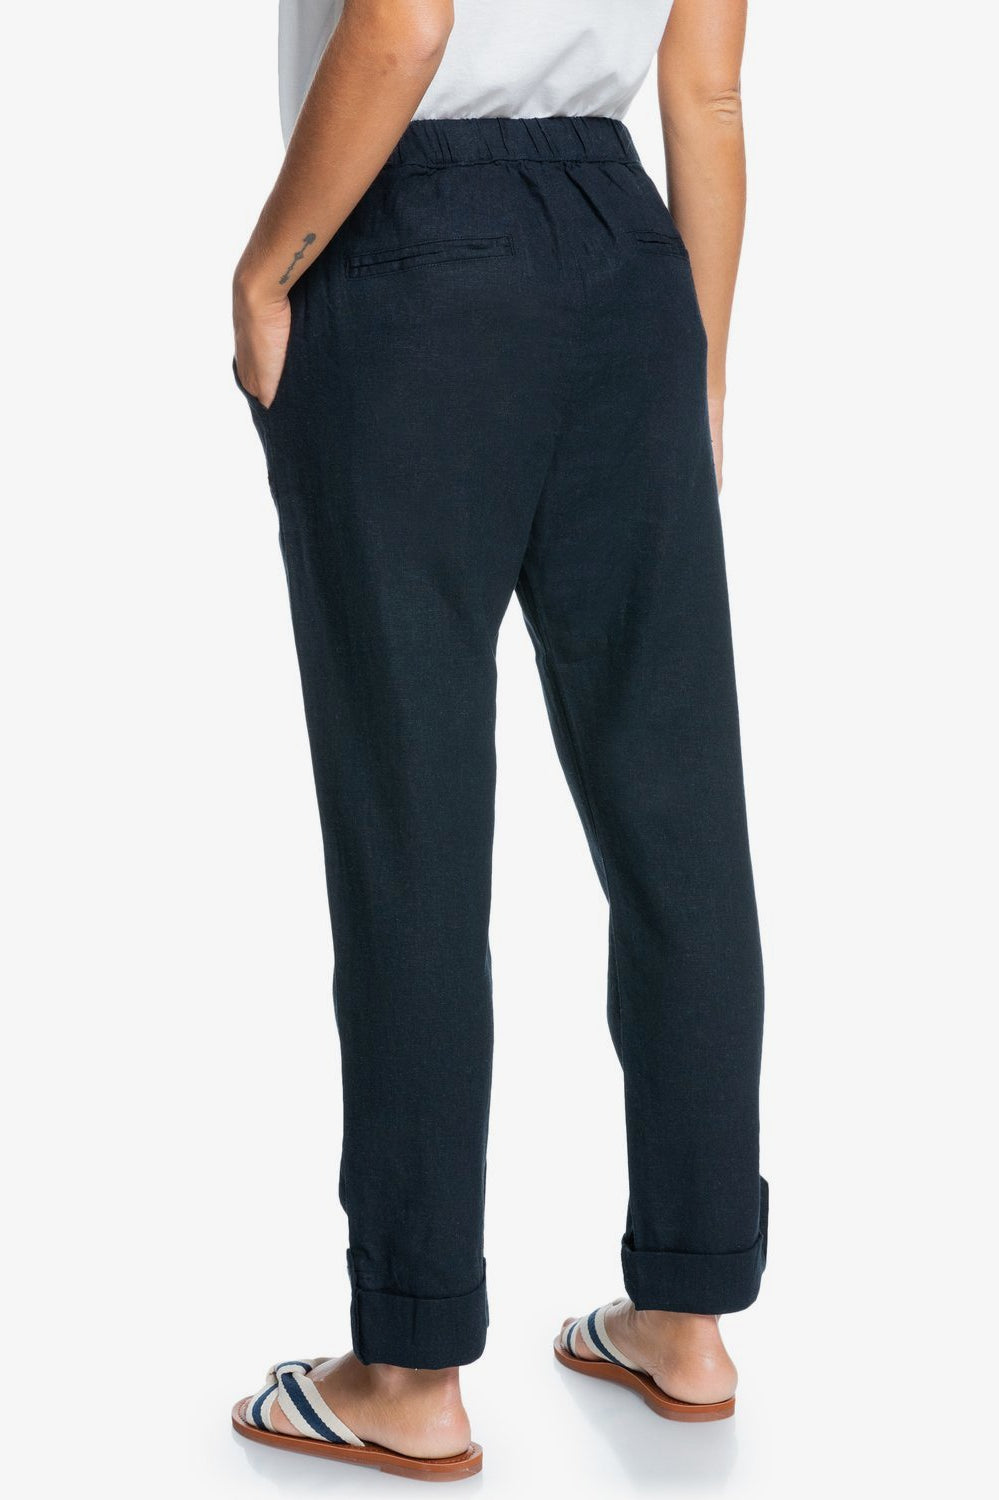 Plaid Pajama Pants in Burgundy – Tilden Co. LLC